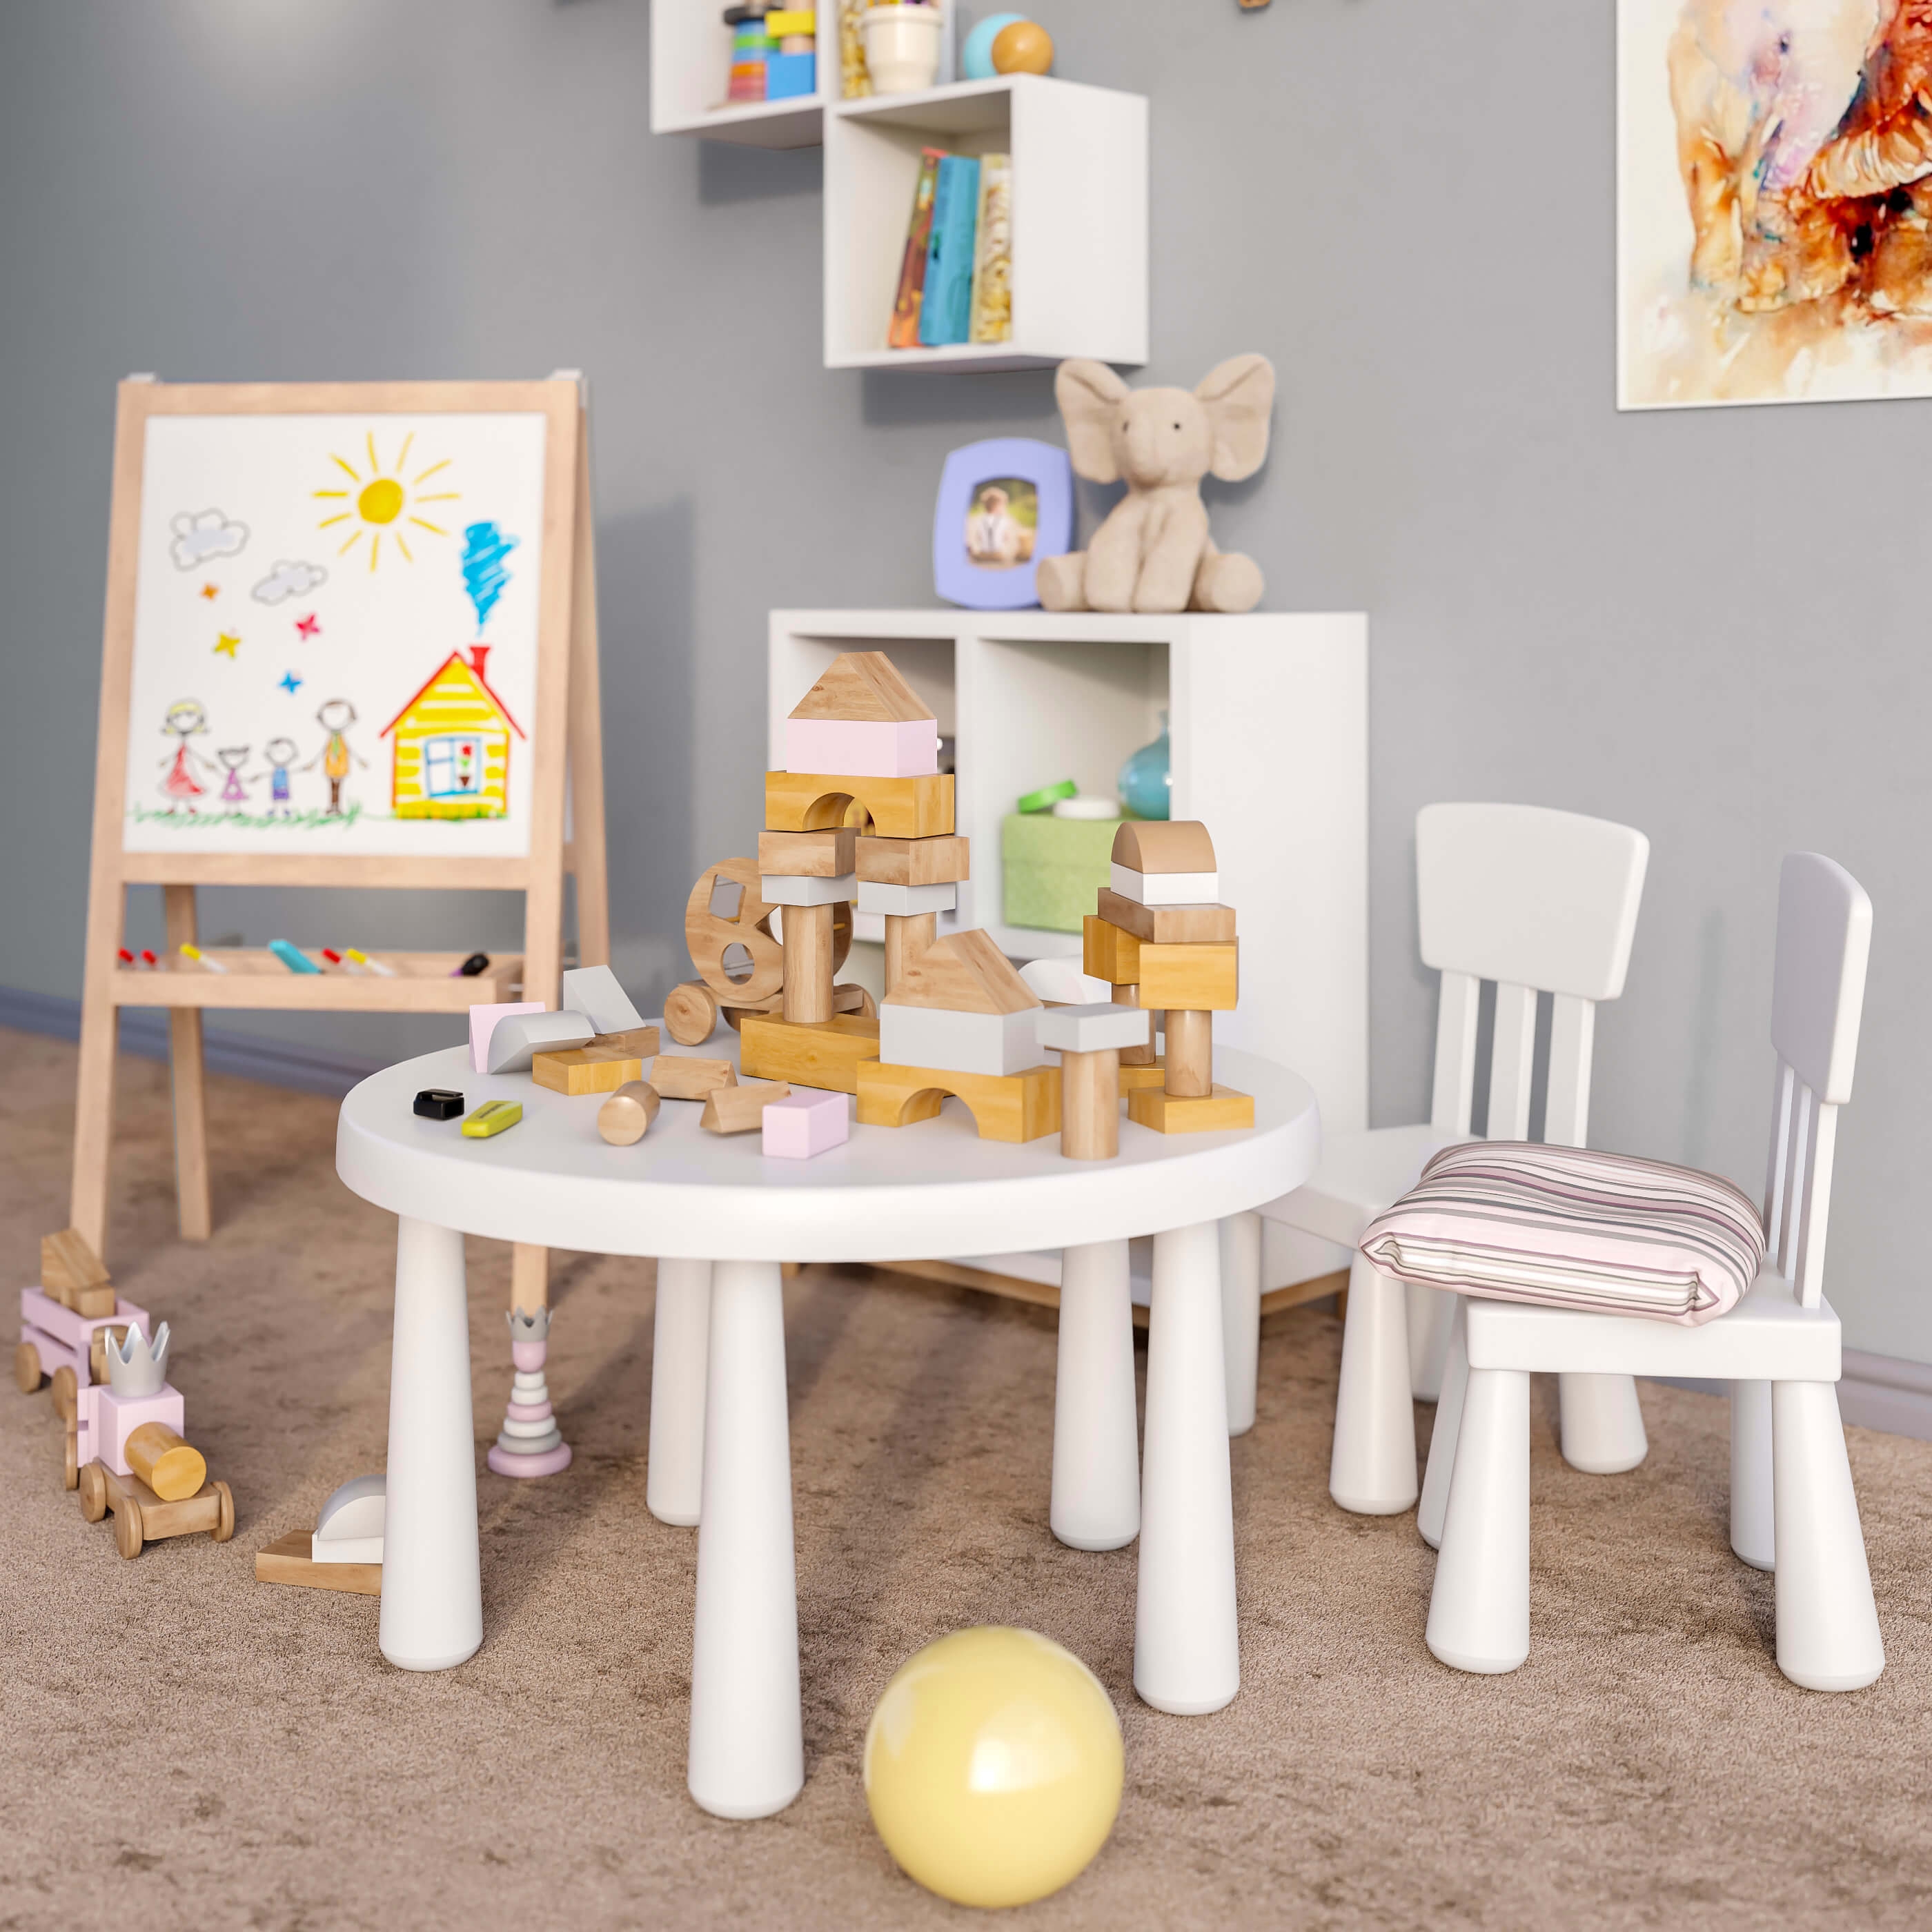 Decorative set / Full furniture set / Toys / Other Items 3